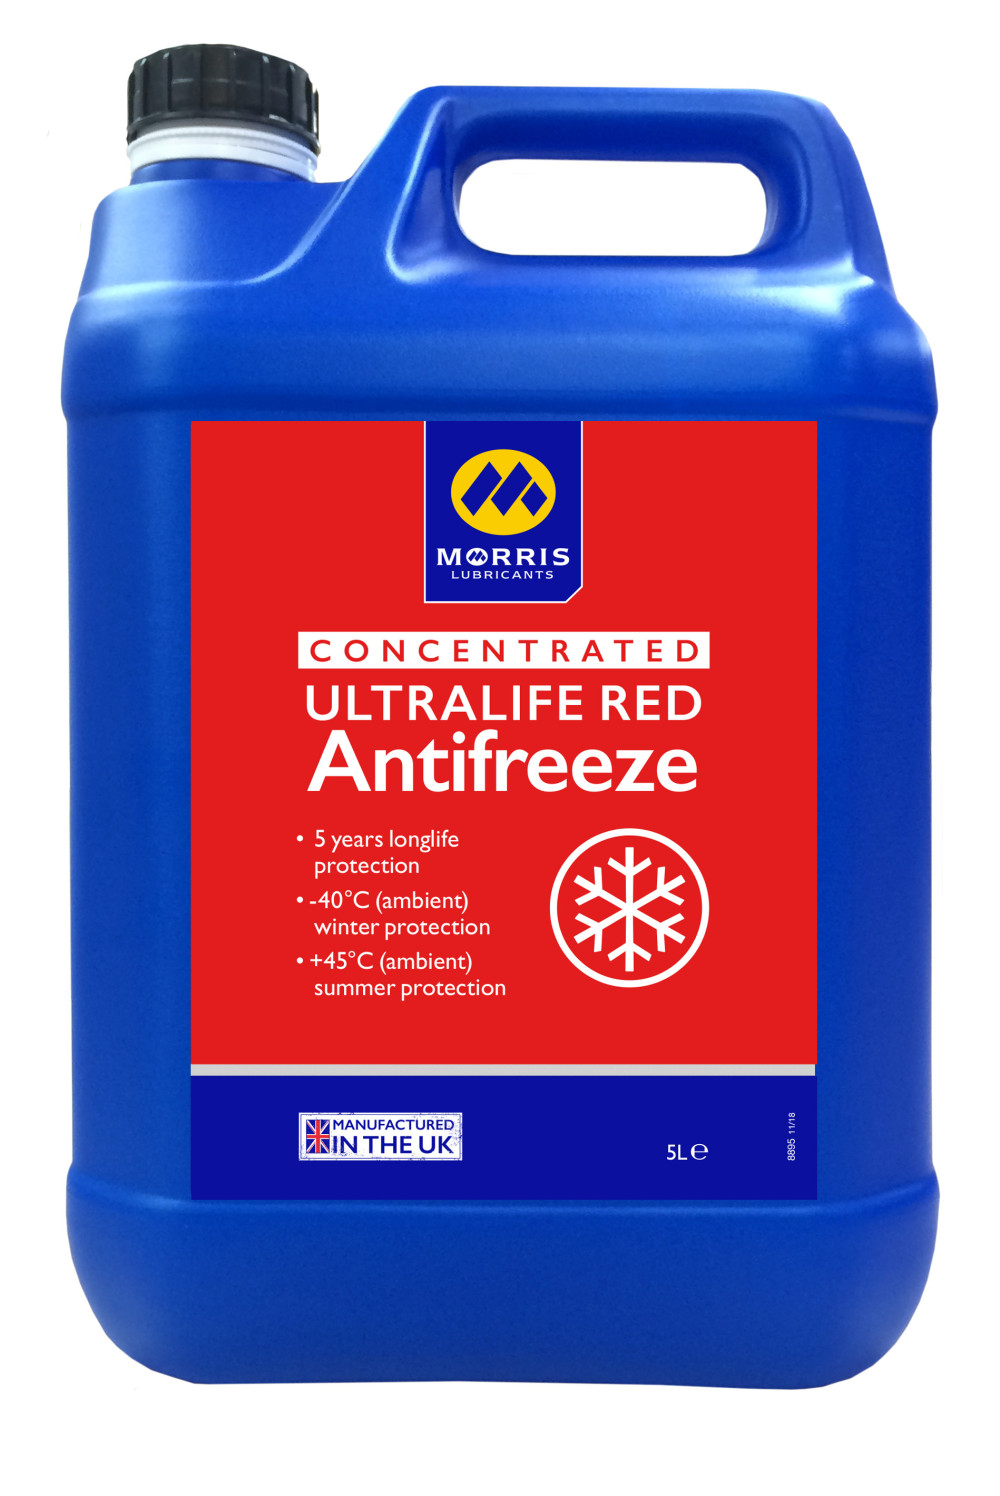 Ultralife Red Antifreeze